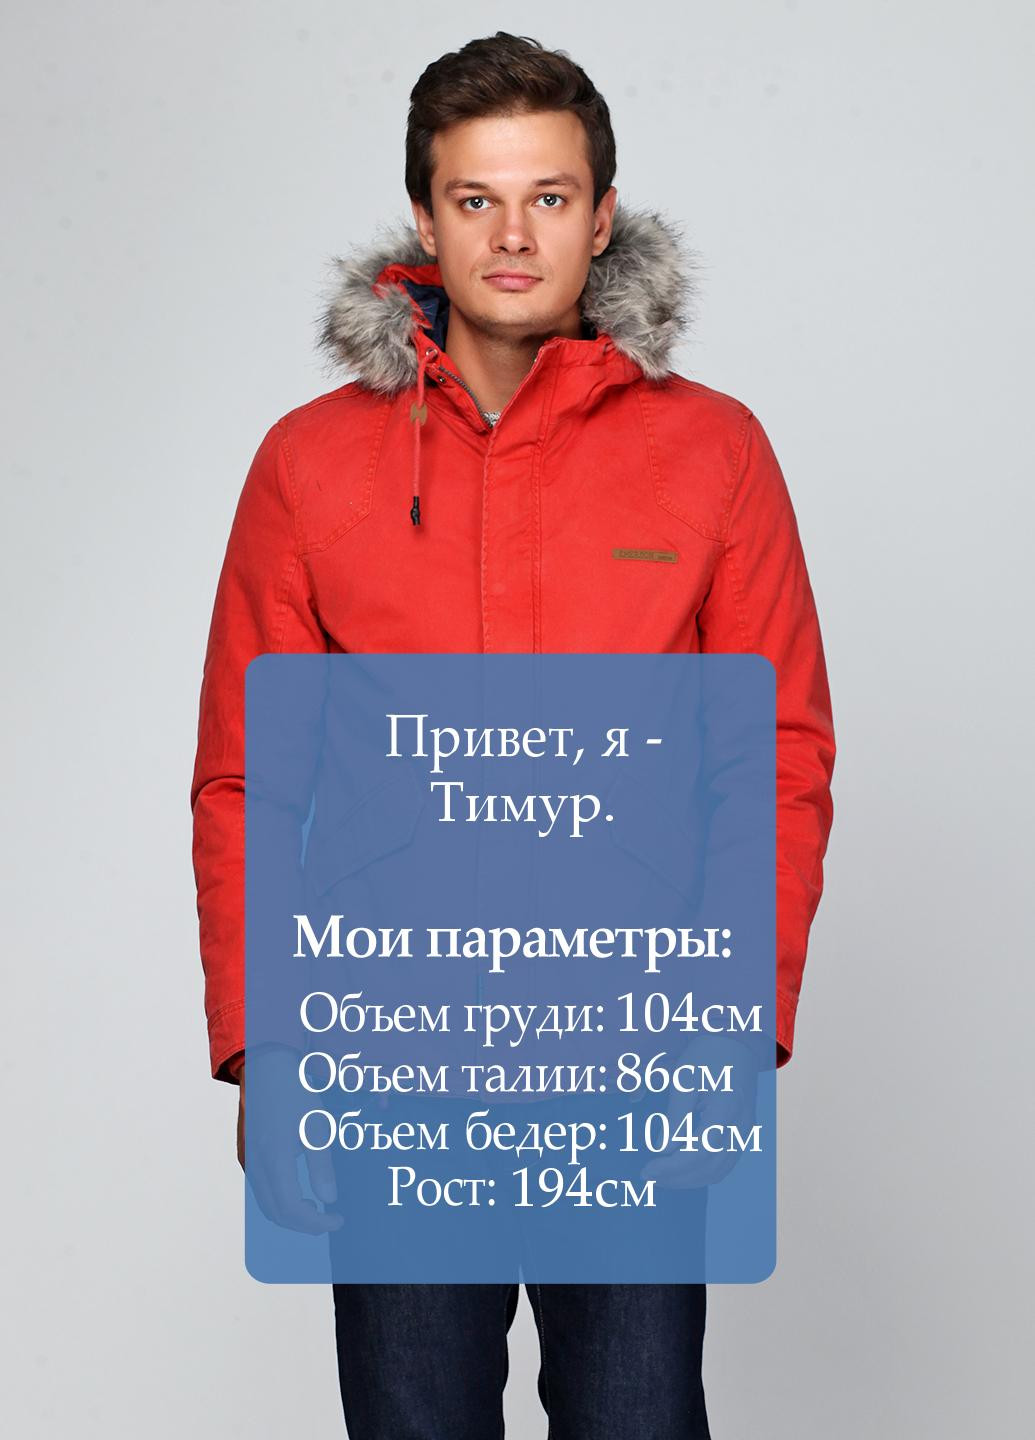 Красная демисезонная куртка Emerson